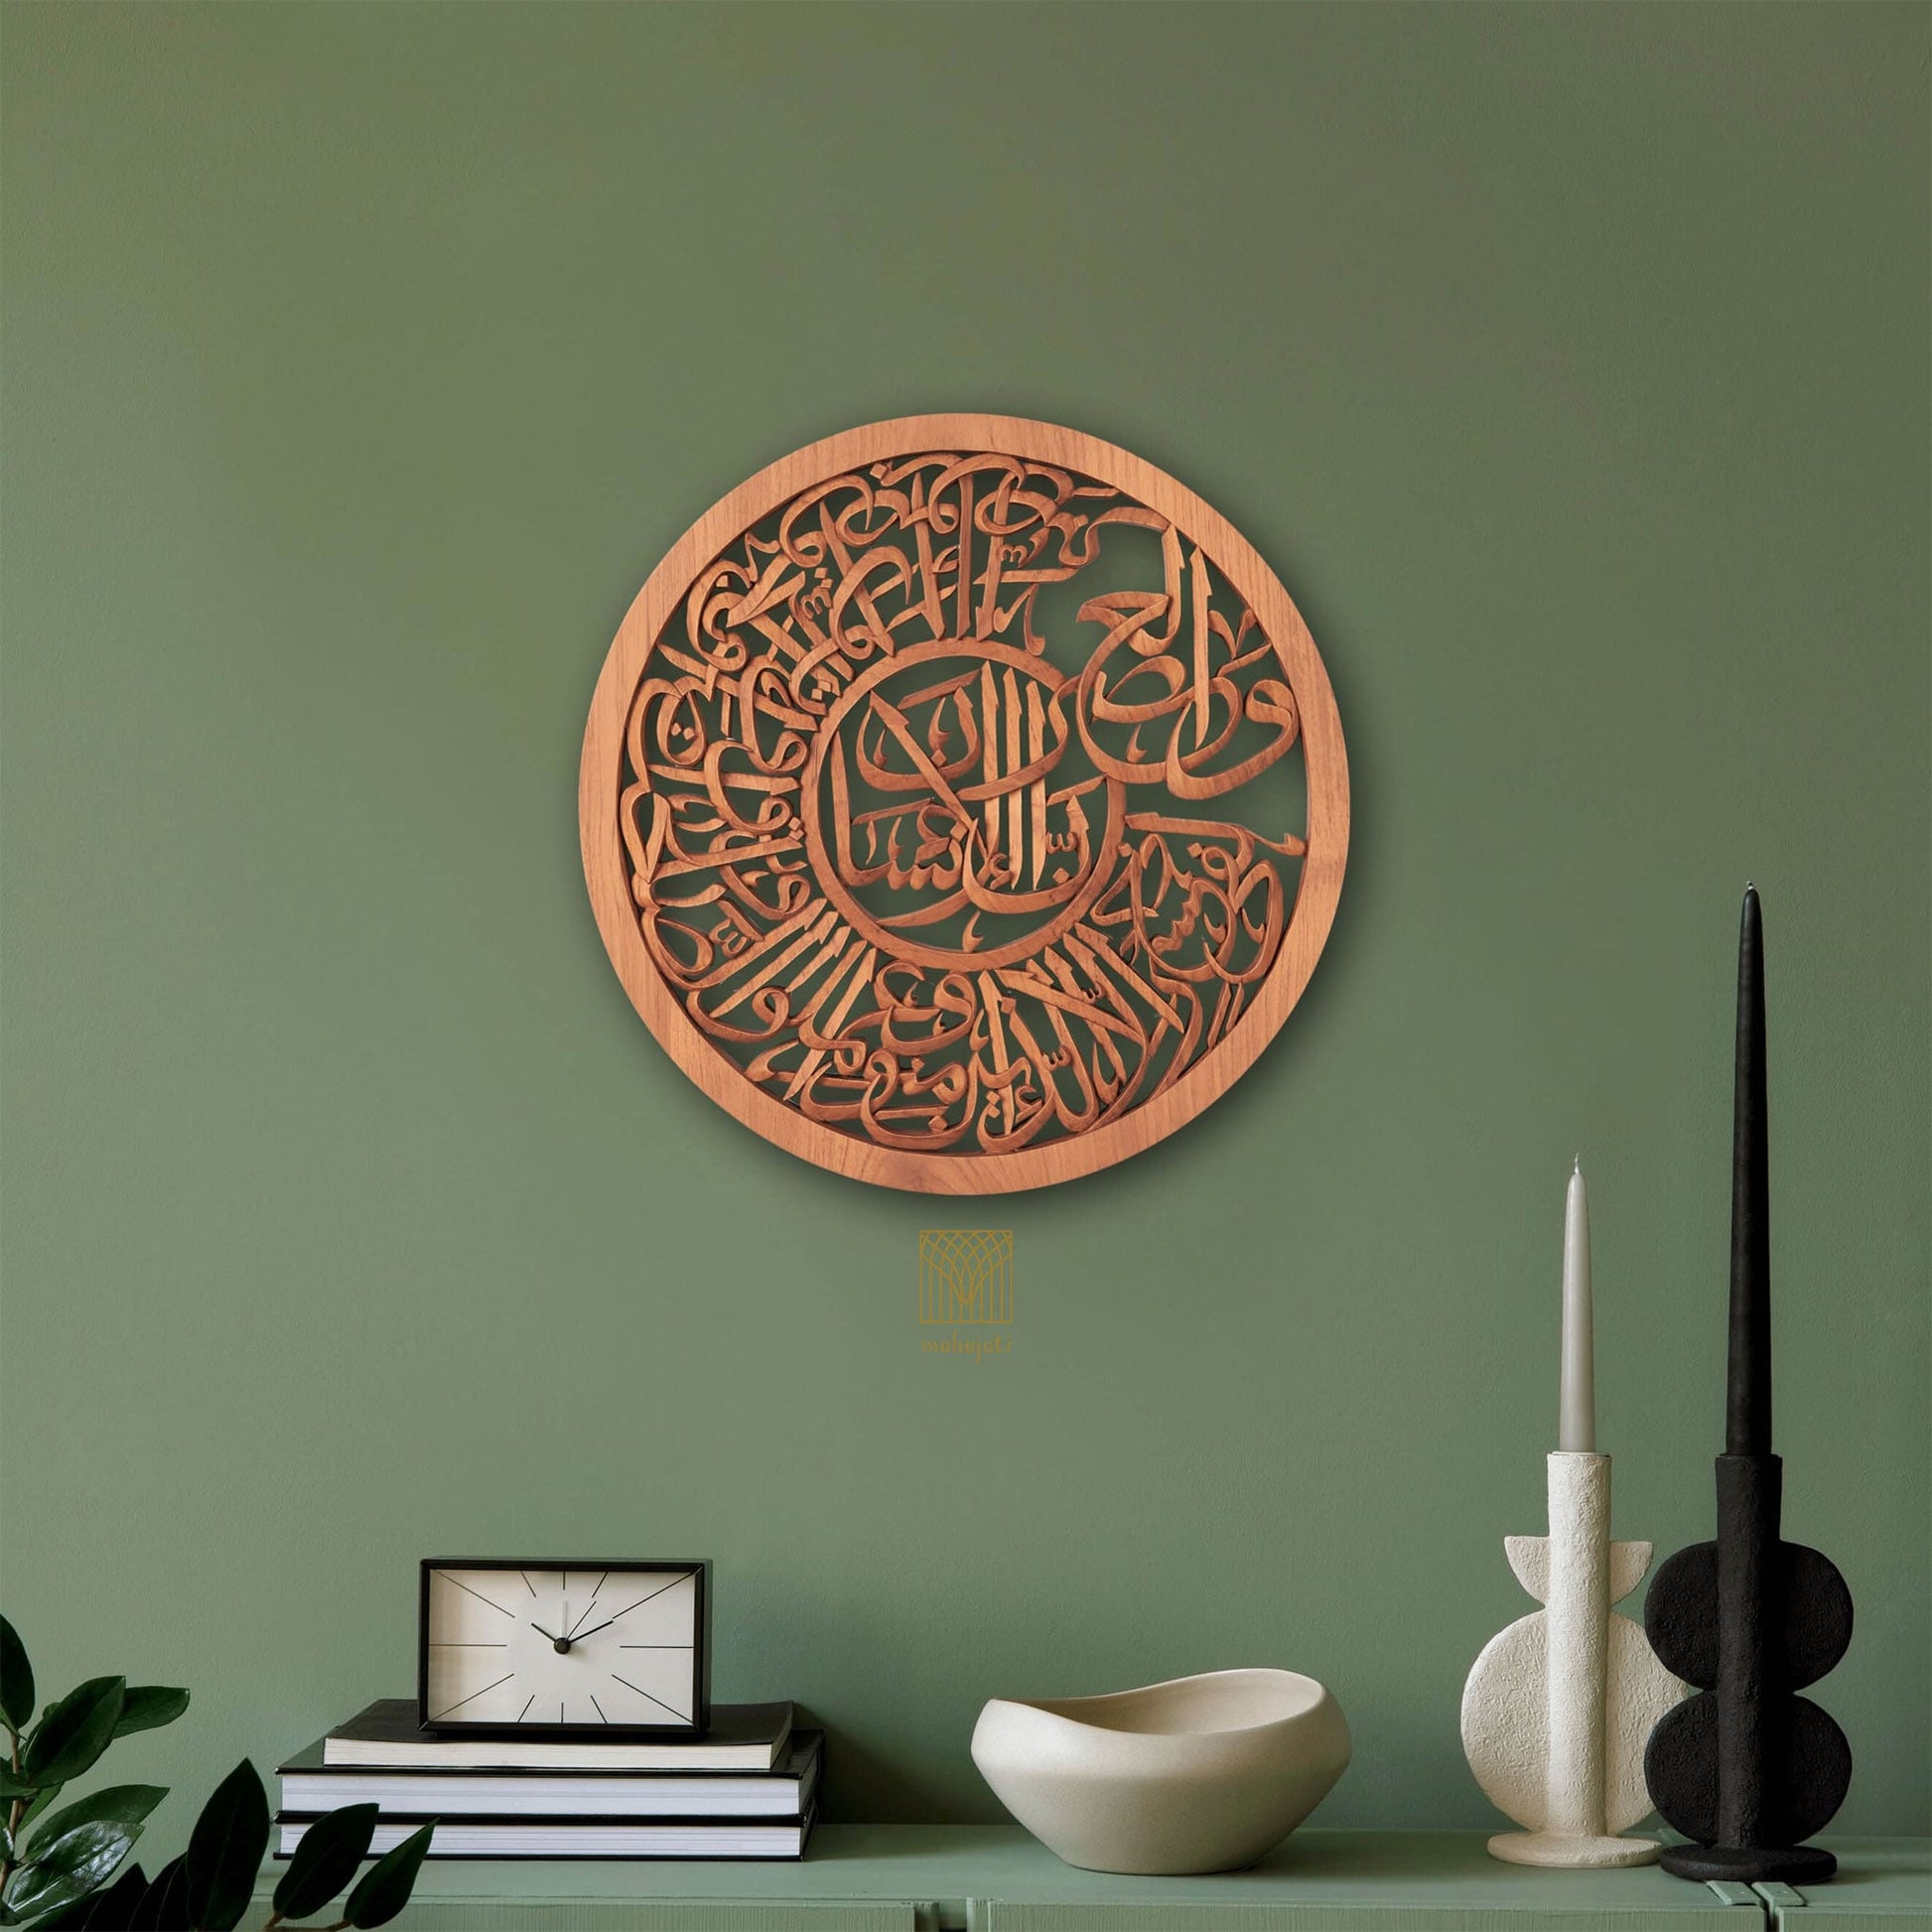 Muslim Gift, Islamic Wall Art & Decor by Mahajati. Surah Al-Asr, Islamic Calligraphy Table Stand Decor.